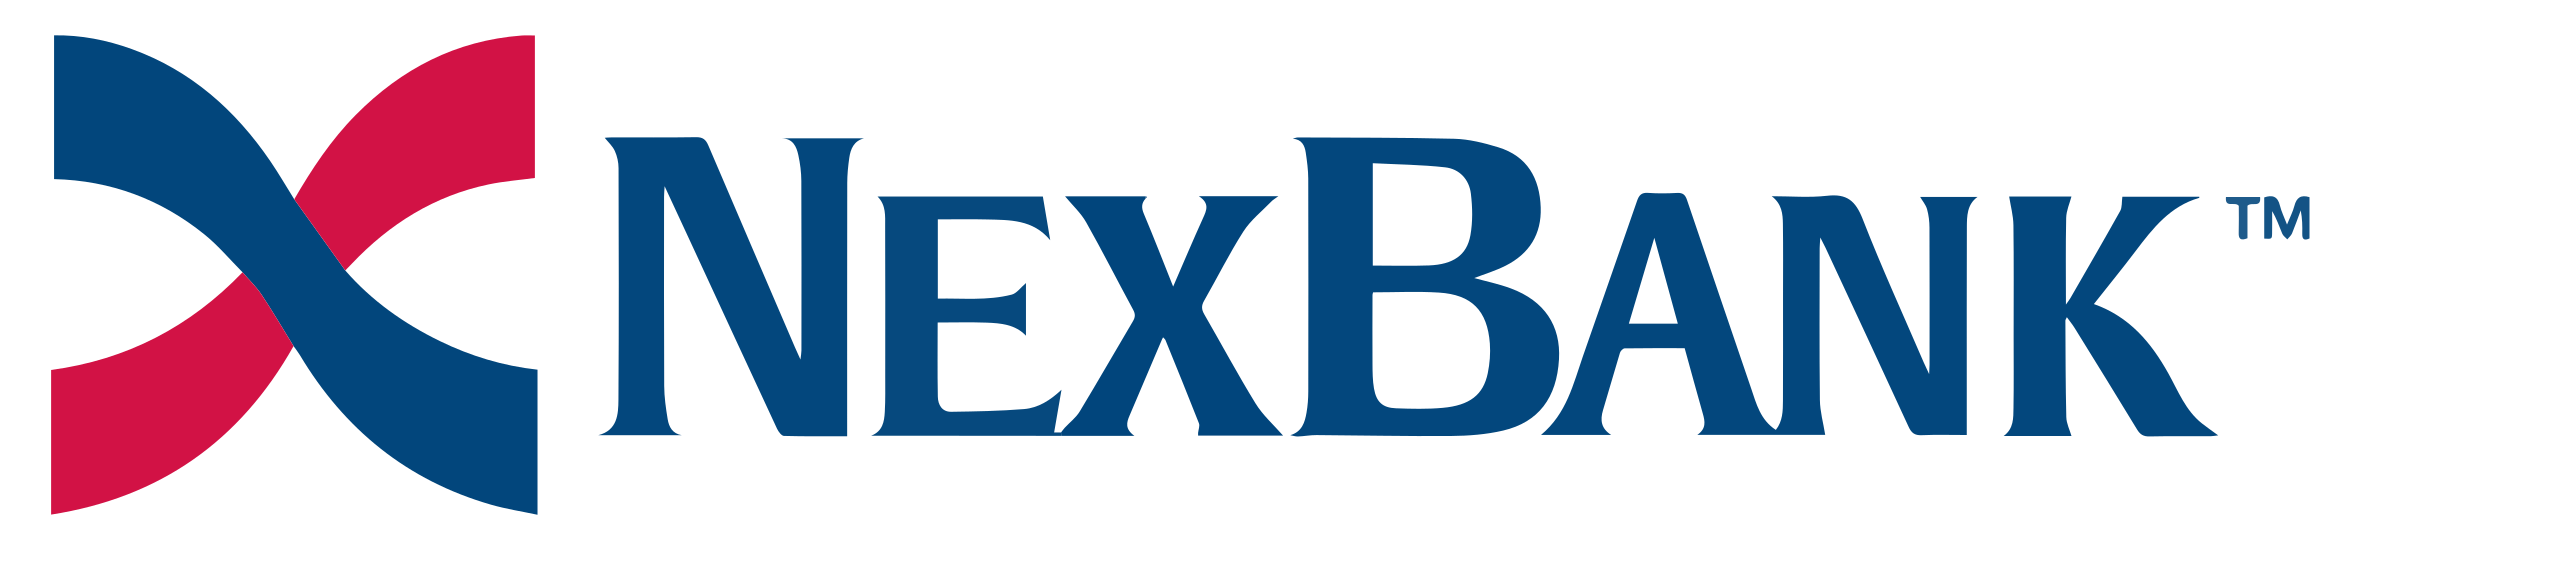 Offer image for NexBank Standard CD